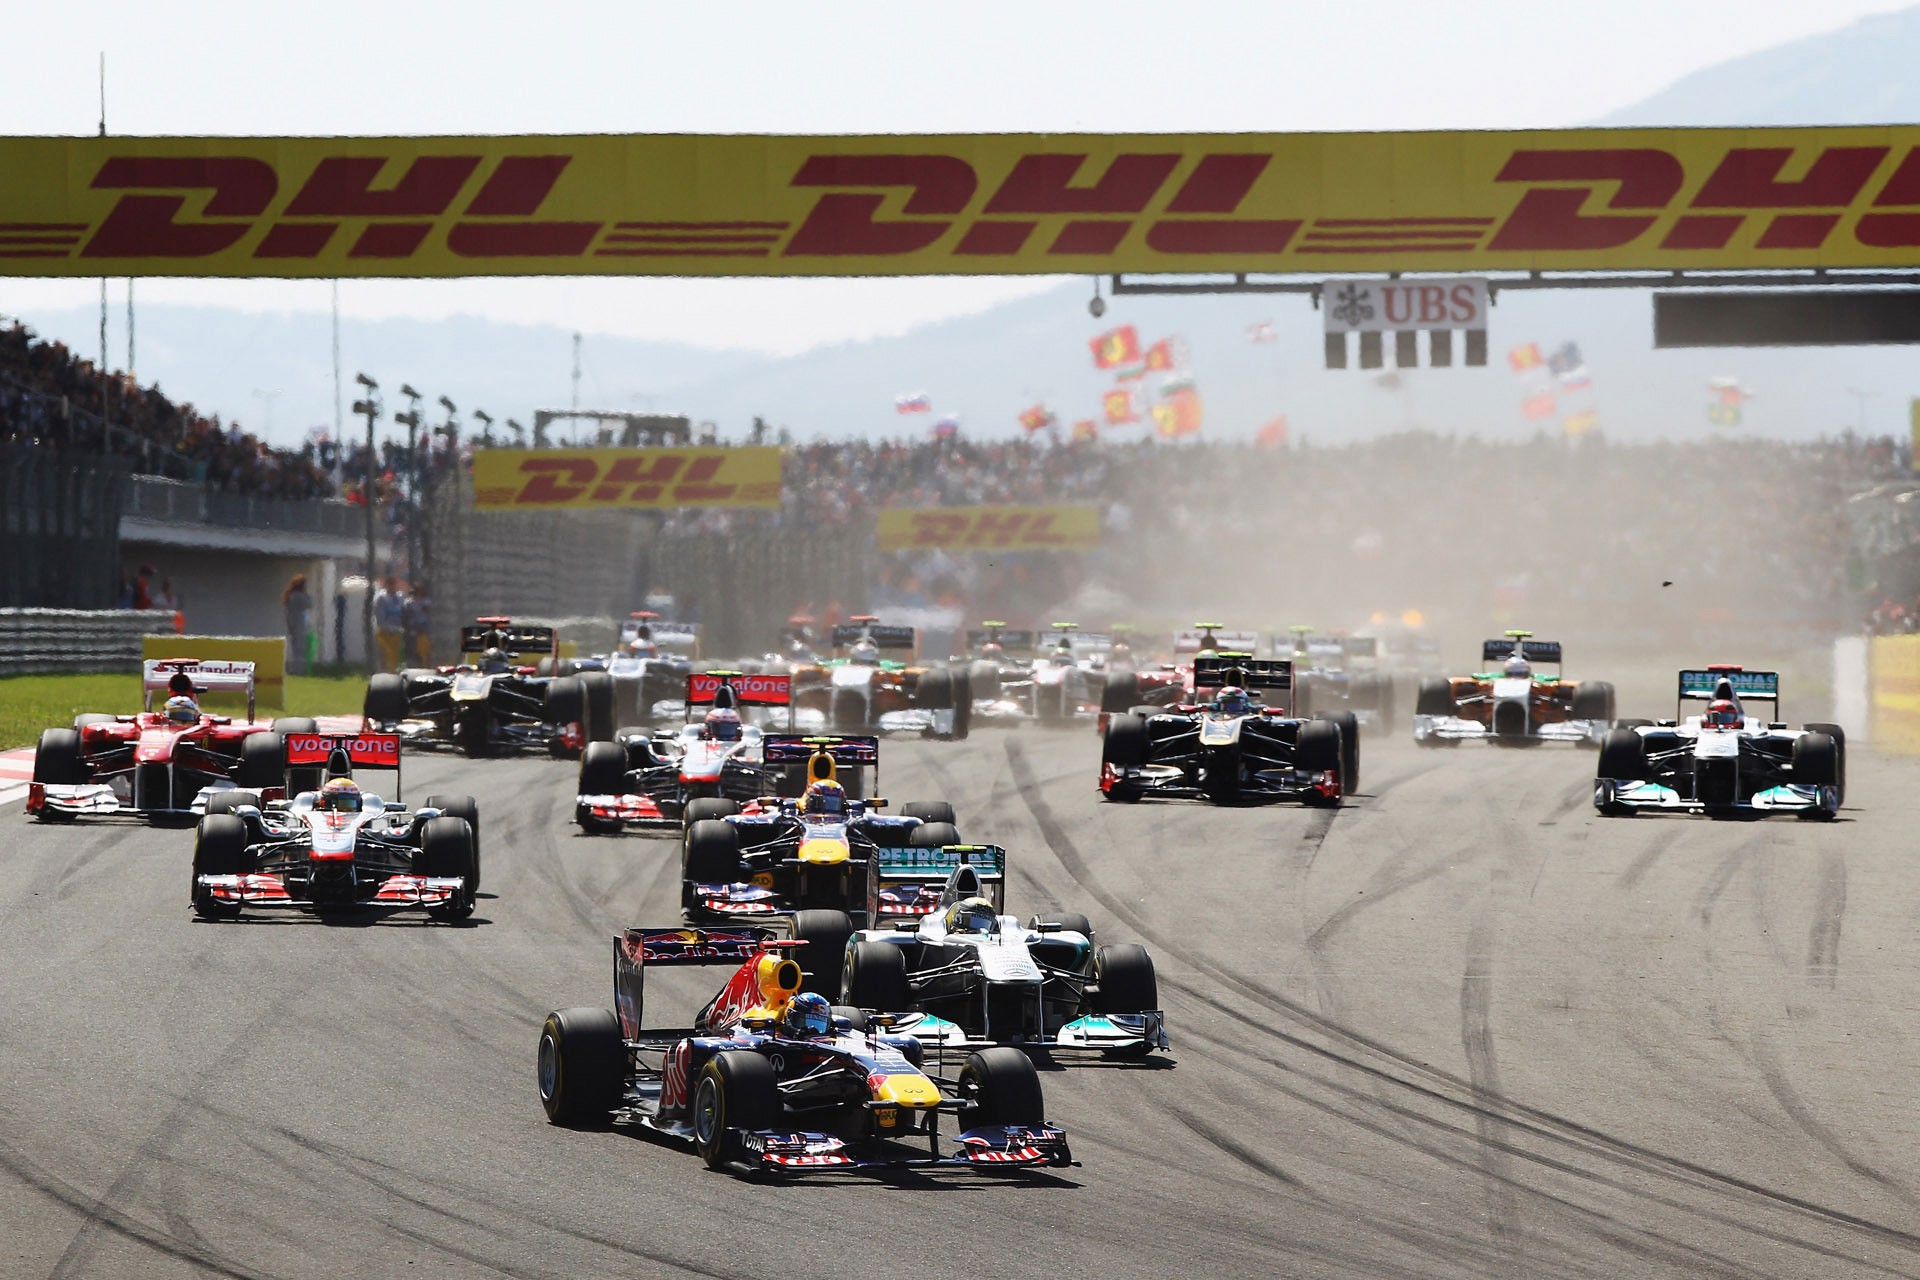 Formula One, race - desktop wallpaper